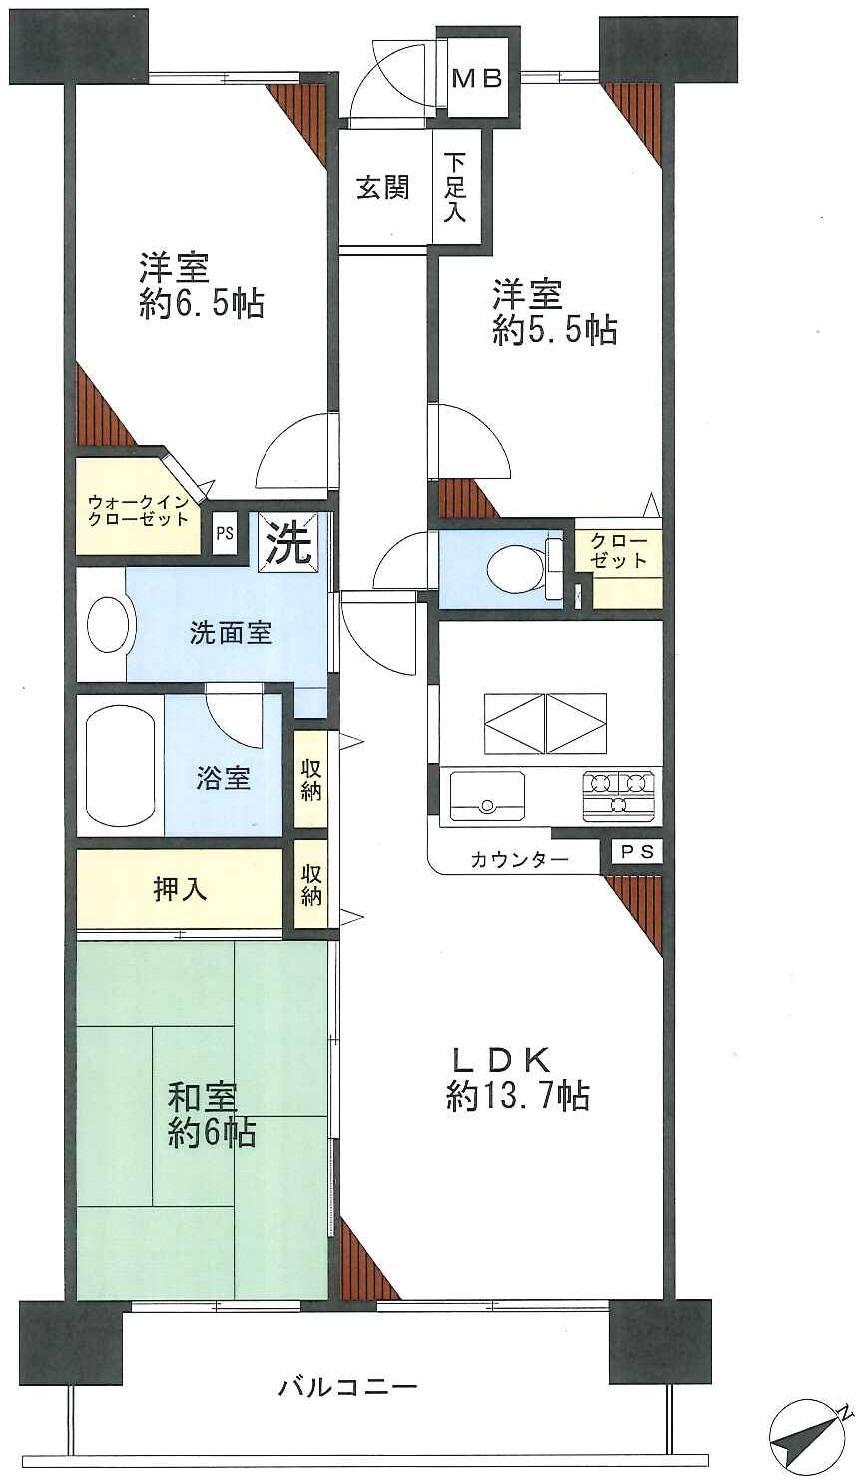 Floor plan. 3LDK, Price 12.6 million yen, Occupied area 70.77 sq m , Balcony area 10.6 sq m